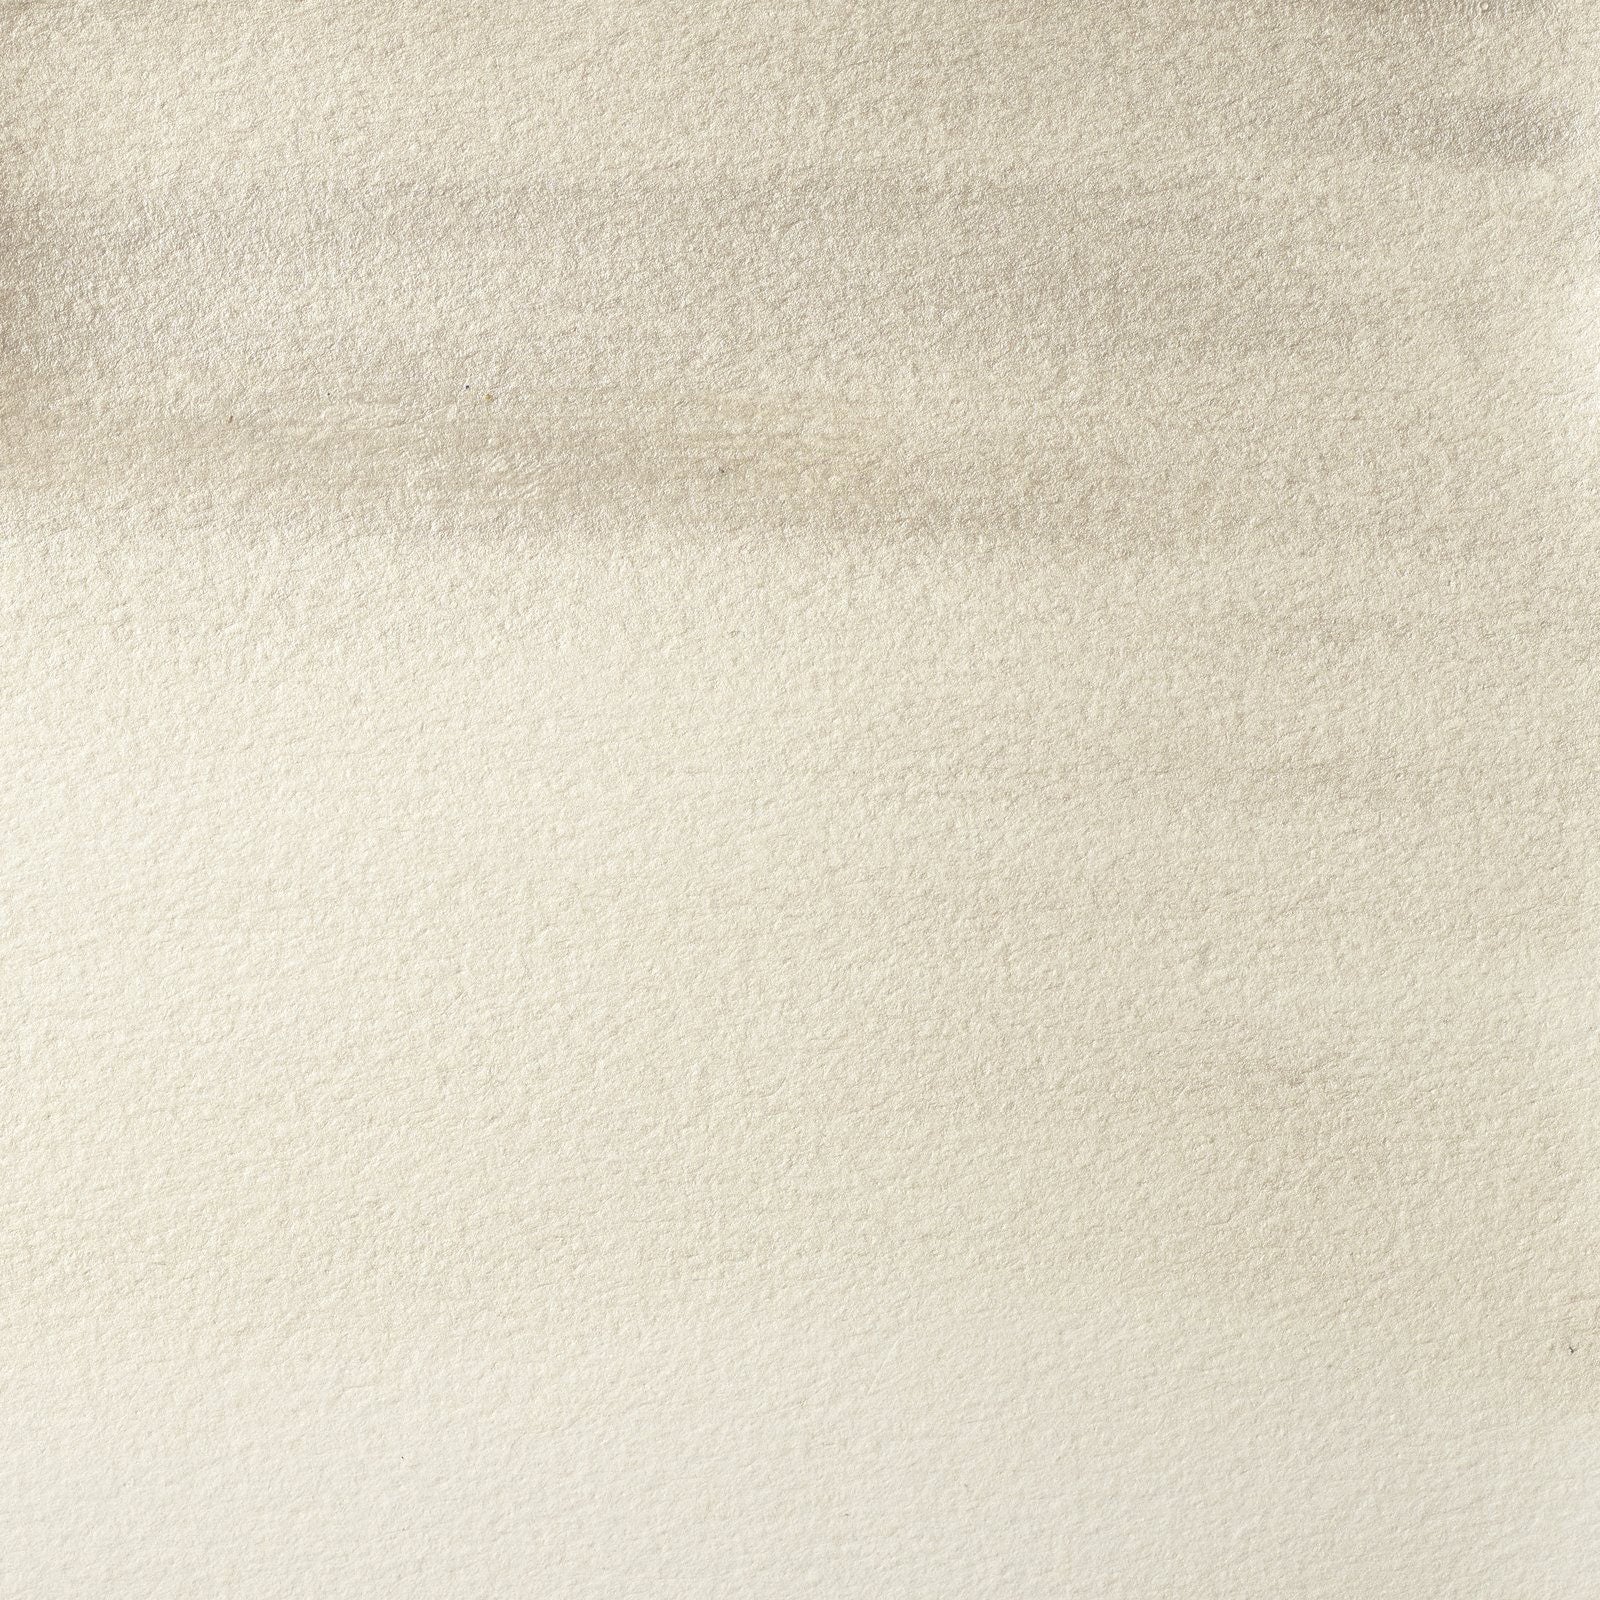 Winsor and Newton - Cotman Watercolour Half Pan - Iridescent White